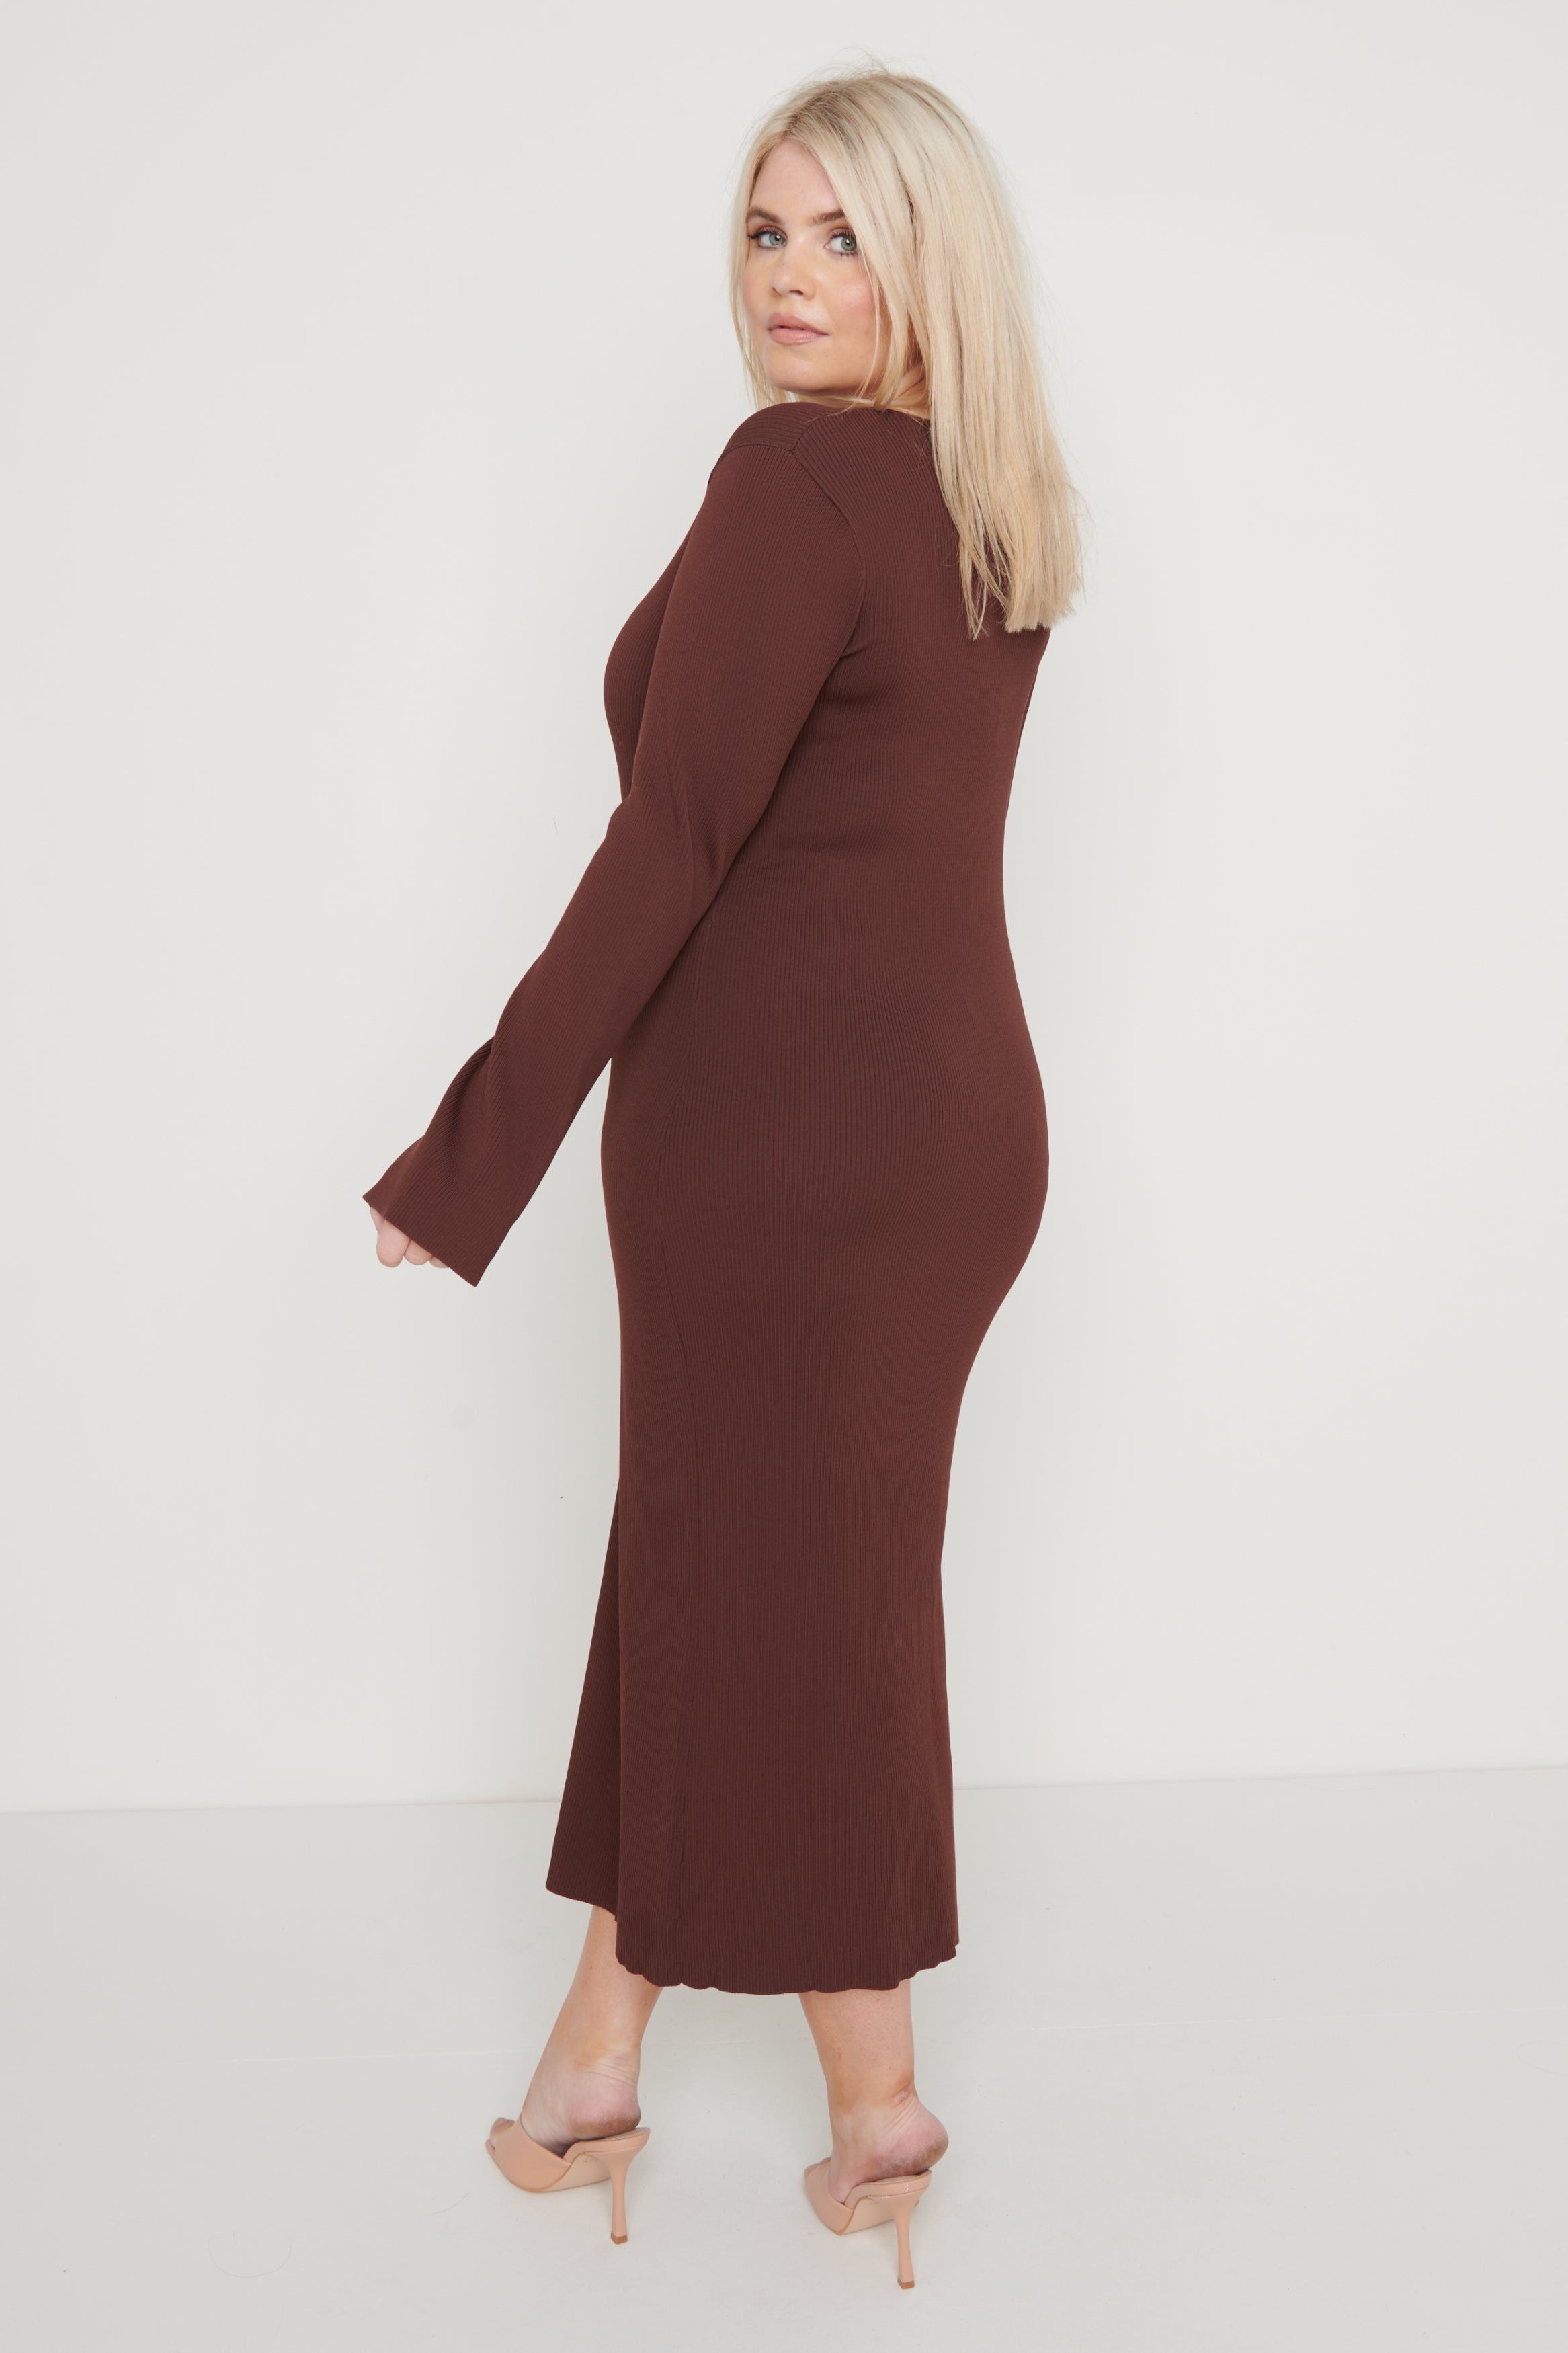 Lara Long Sleeve Dress- Brown